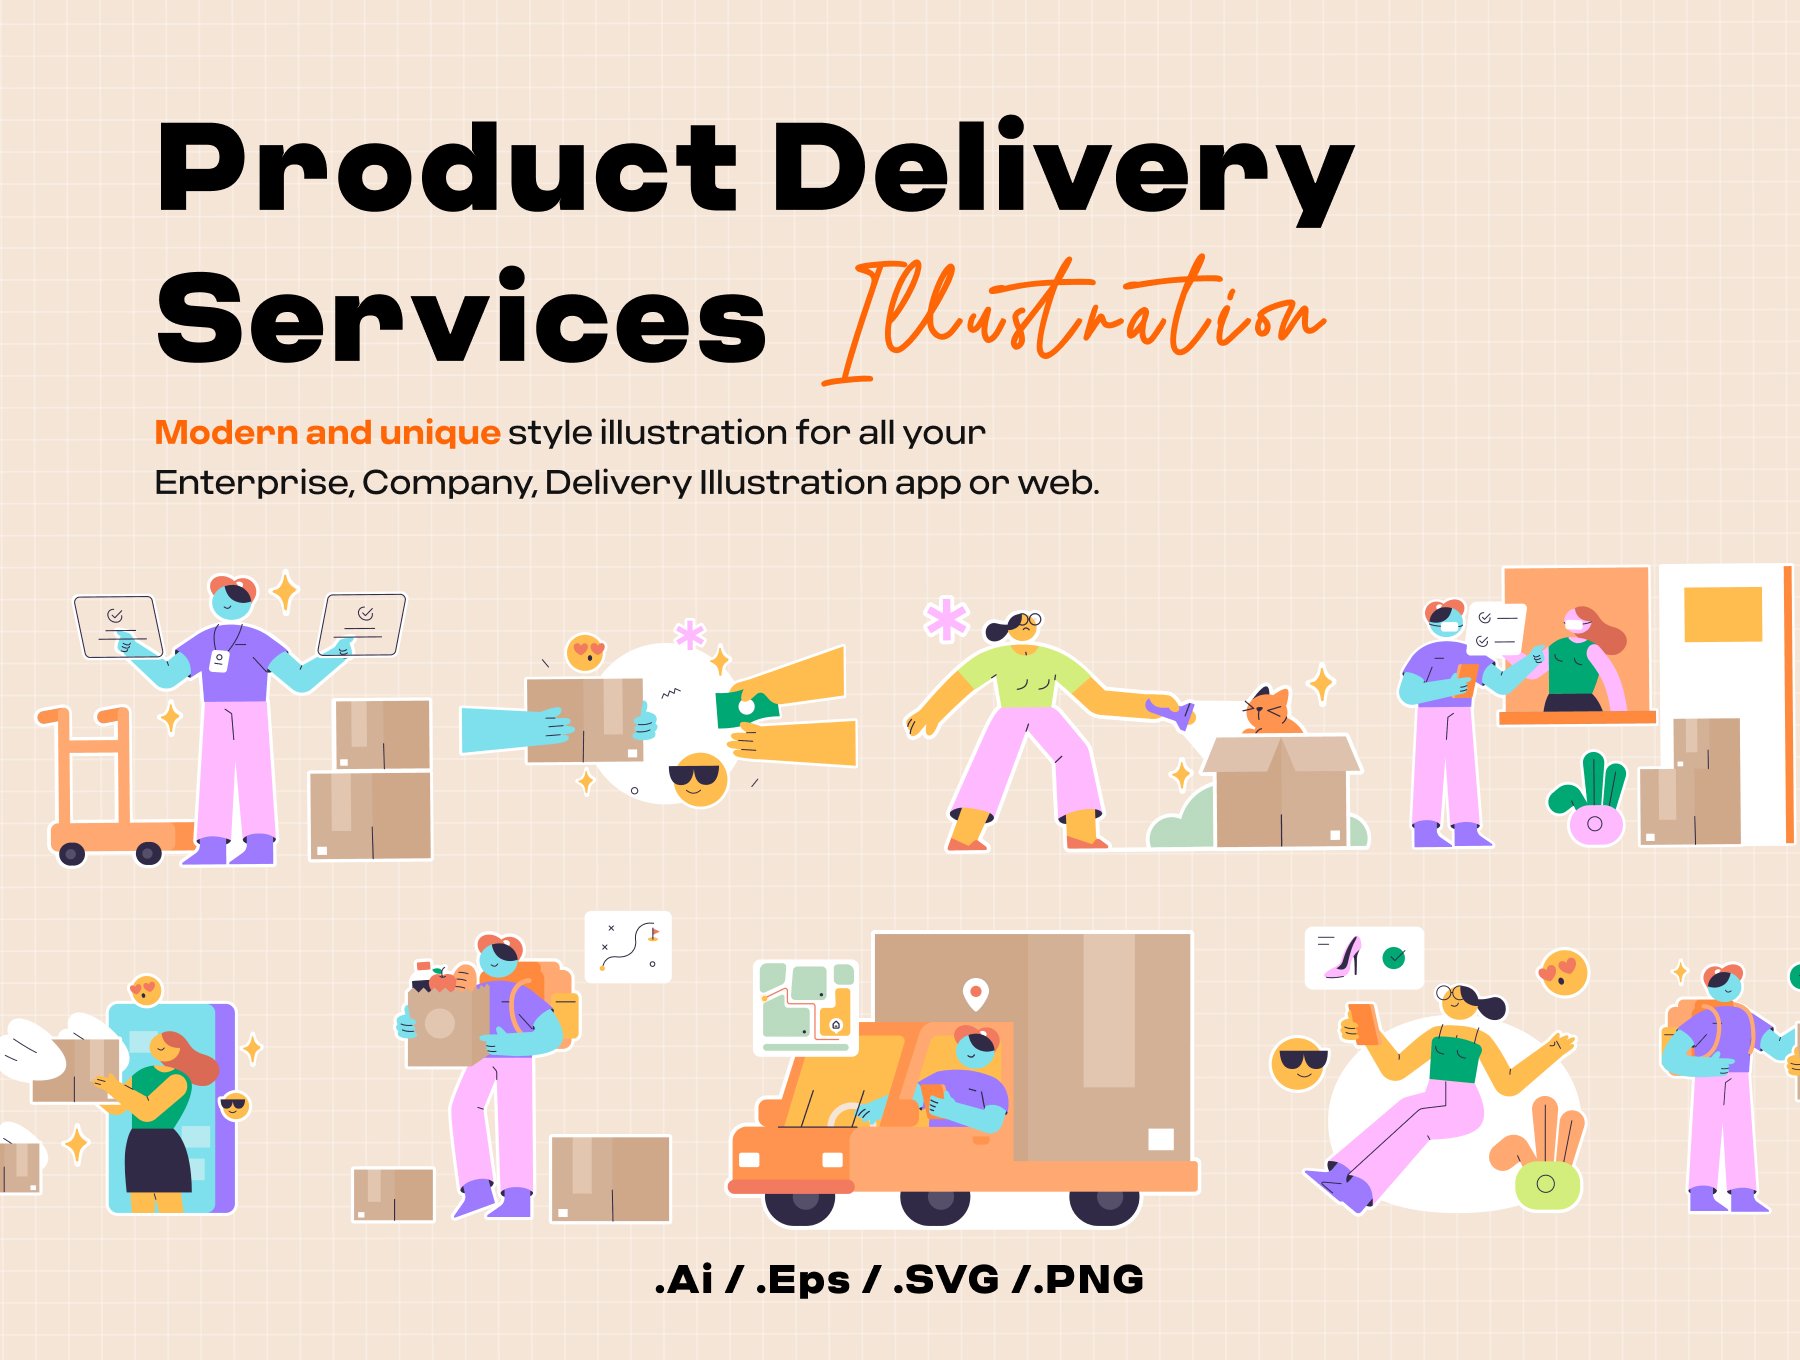 产品送货服务 Product Delivery Services xd格式-插画-到位啦UI